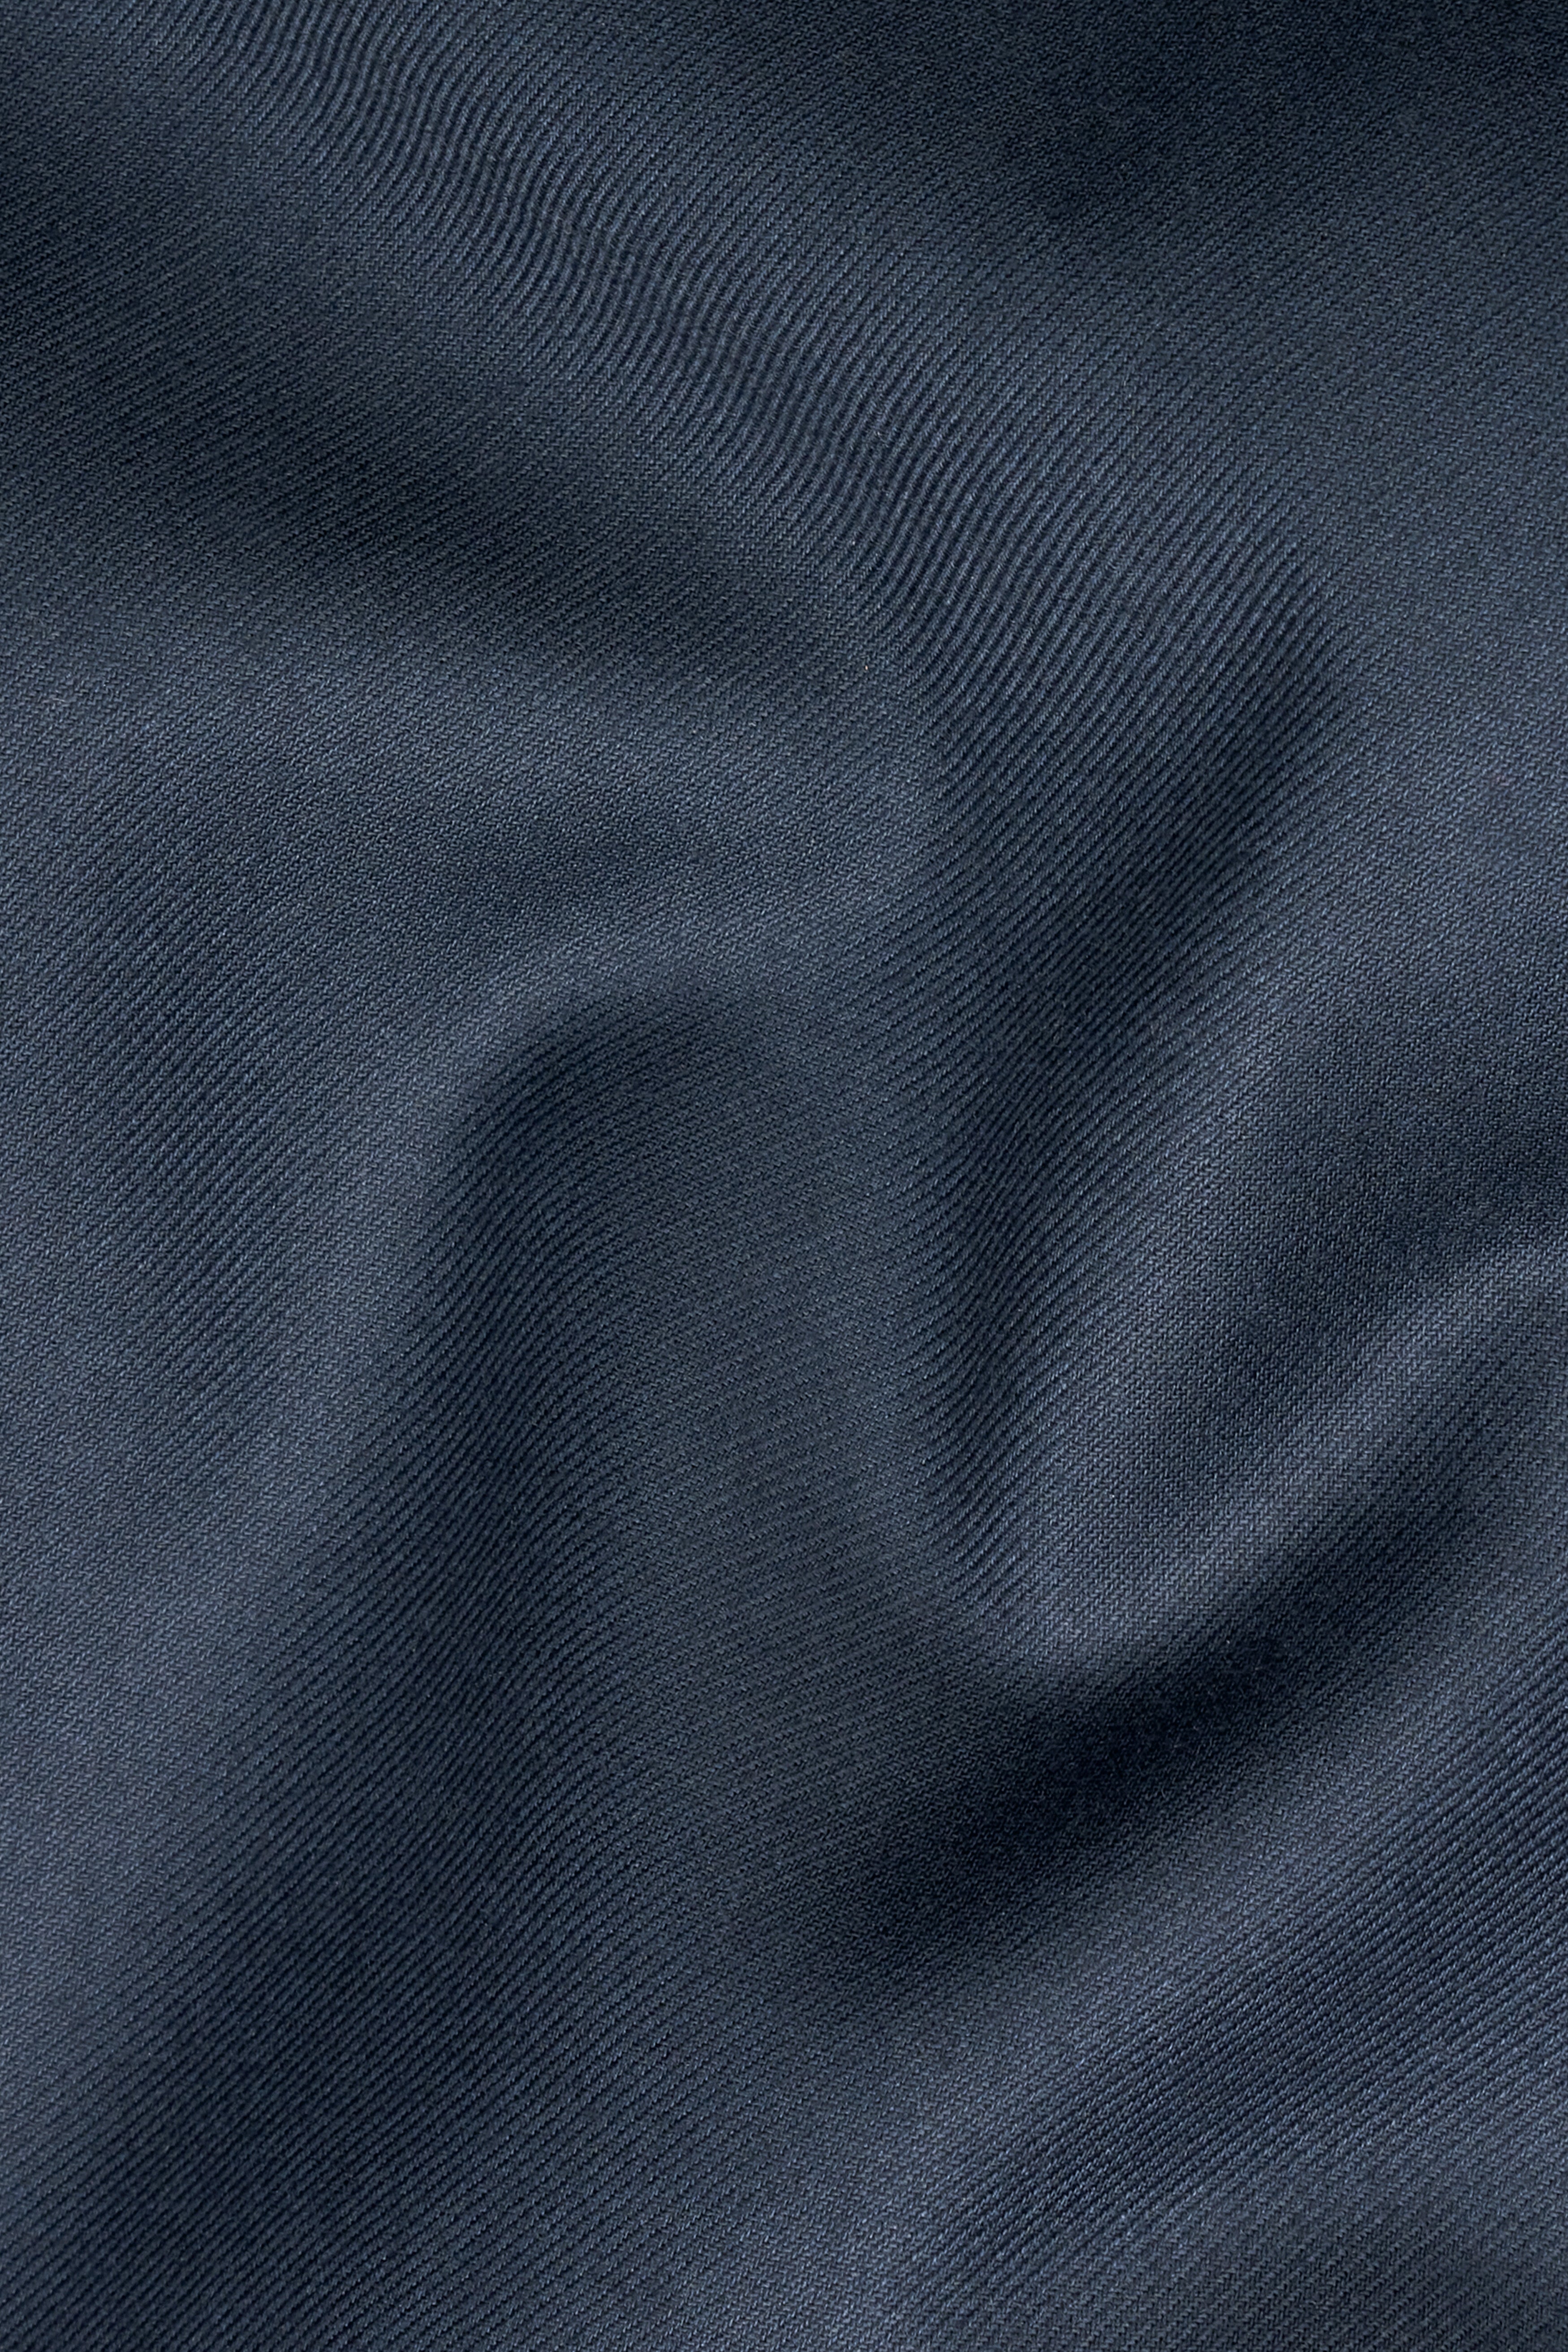 Dark Slate Blue Wool Rich Waistcoat V2733-36, V2733-38, V2733-40, V2733-42, V2733-44, V2733-46, V2733-48, V2733-50, V2733-52, V2733-54, V2733-56, V2733-58, V2733-60